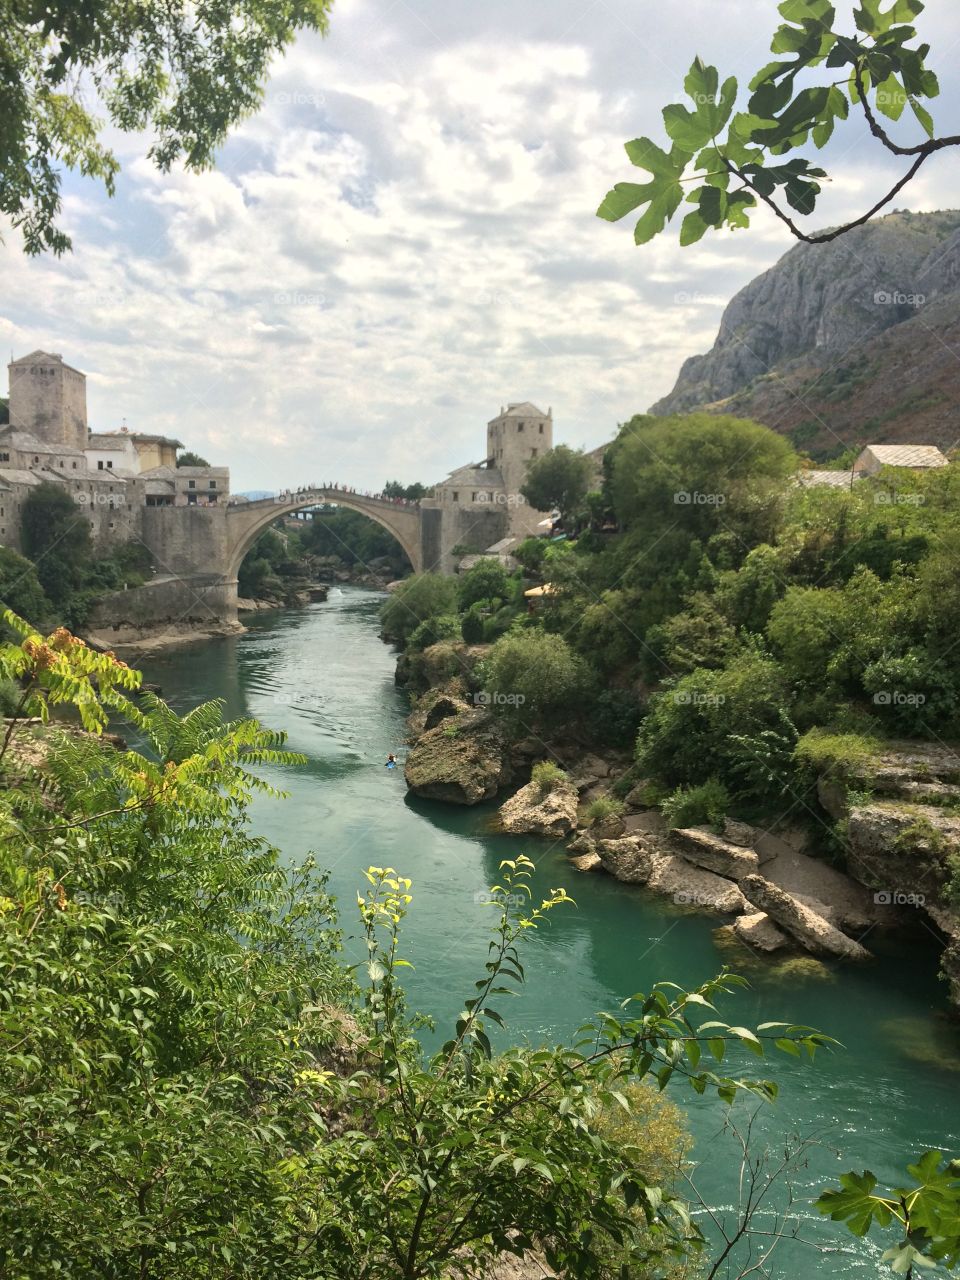 View of Mostar's Old Bridge